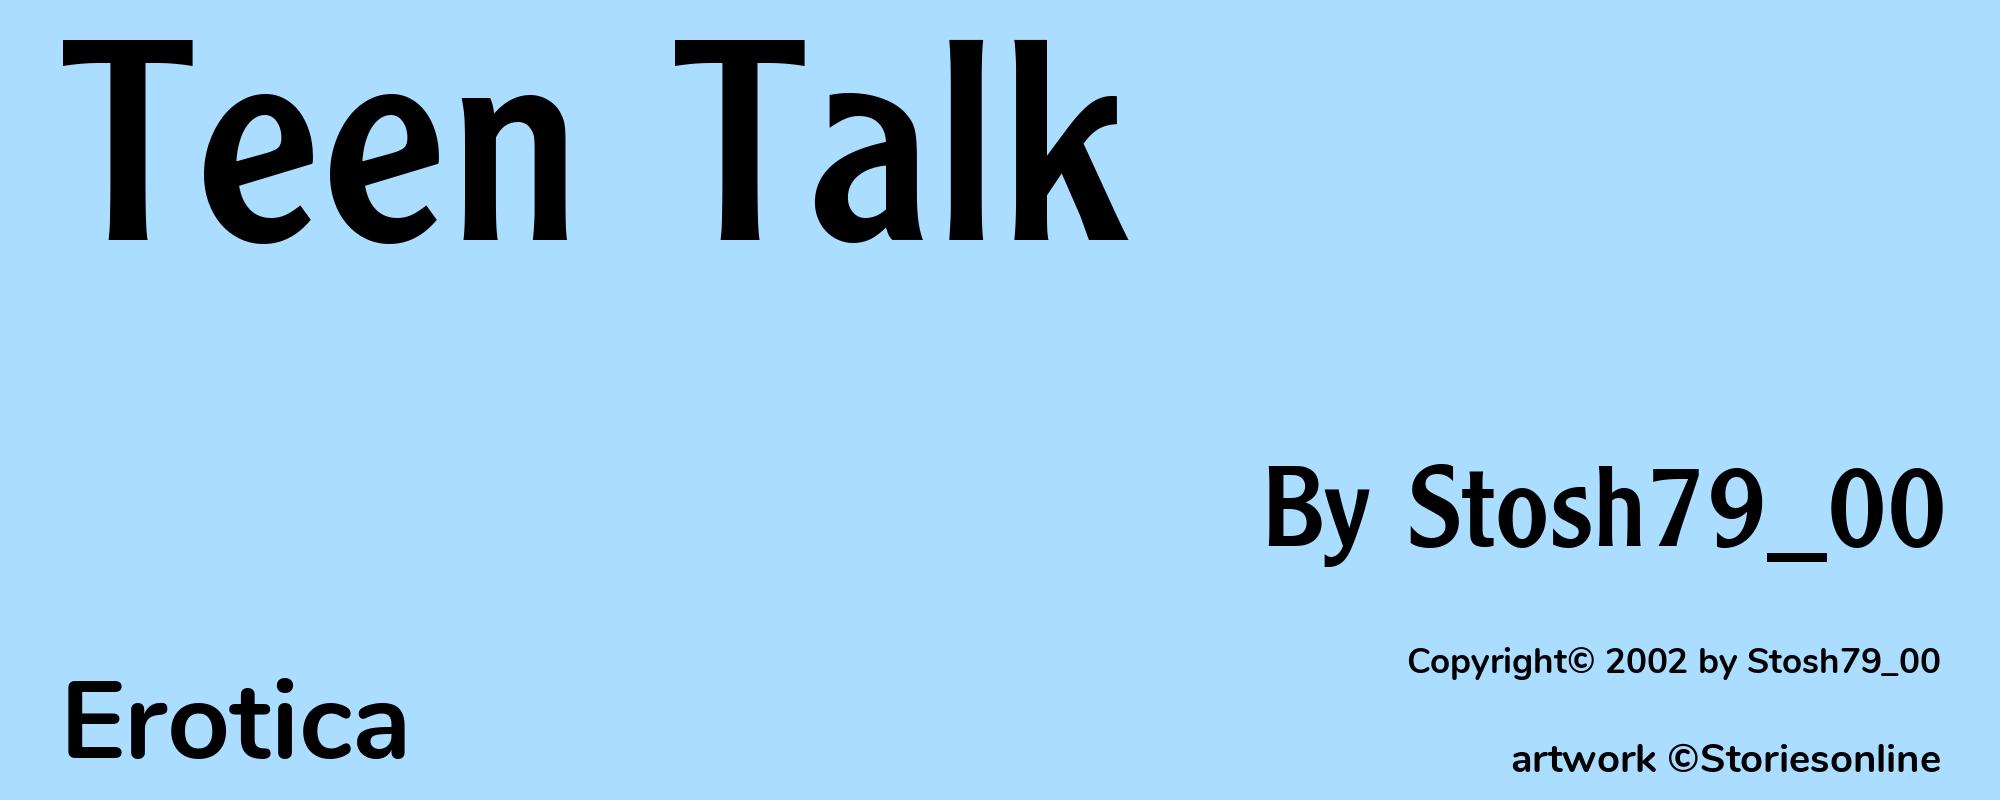 Teen Talk - Cover